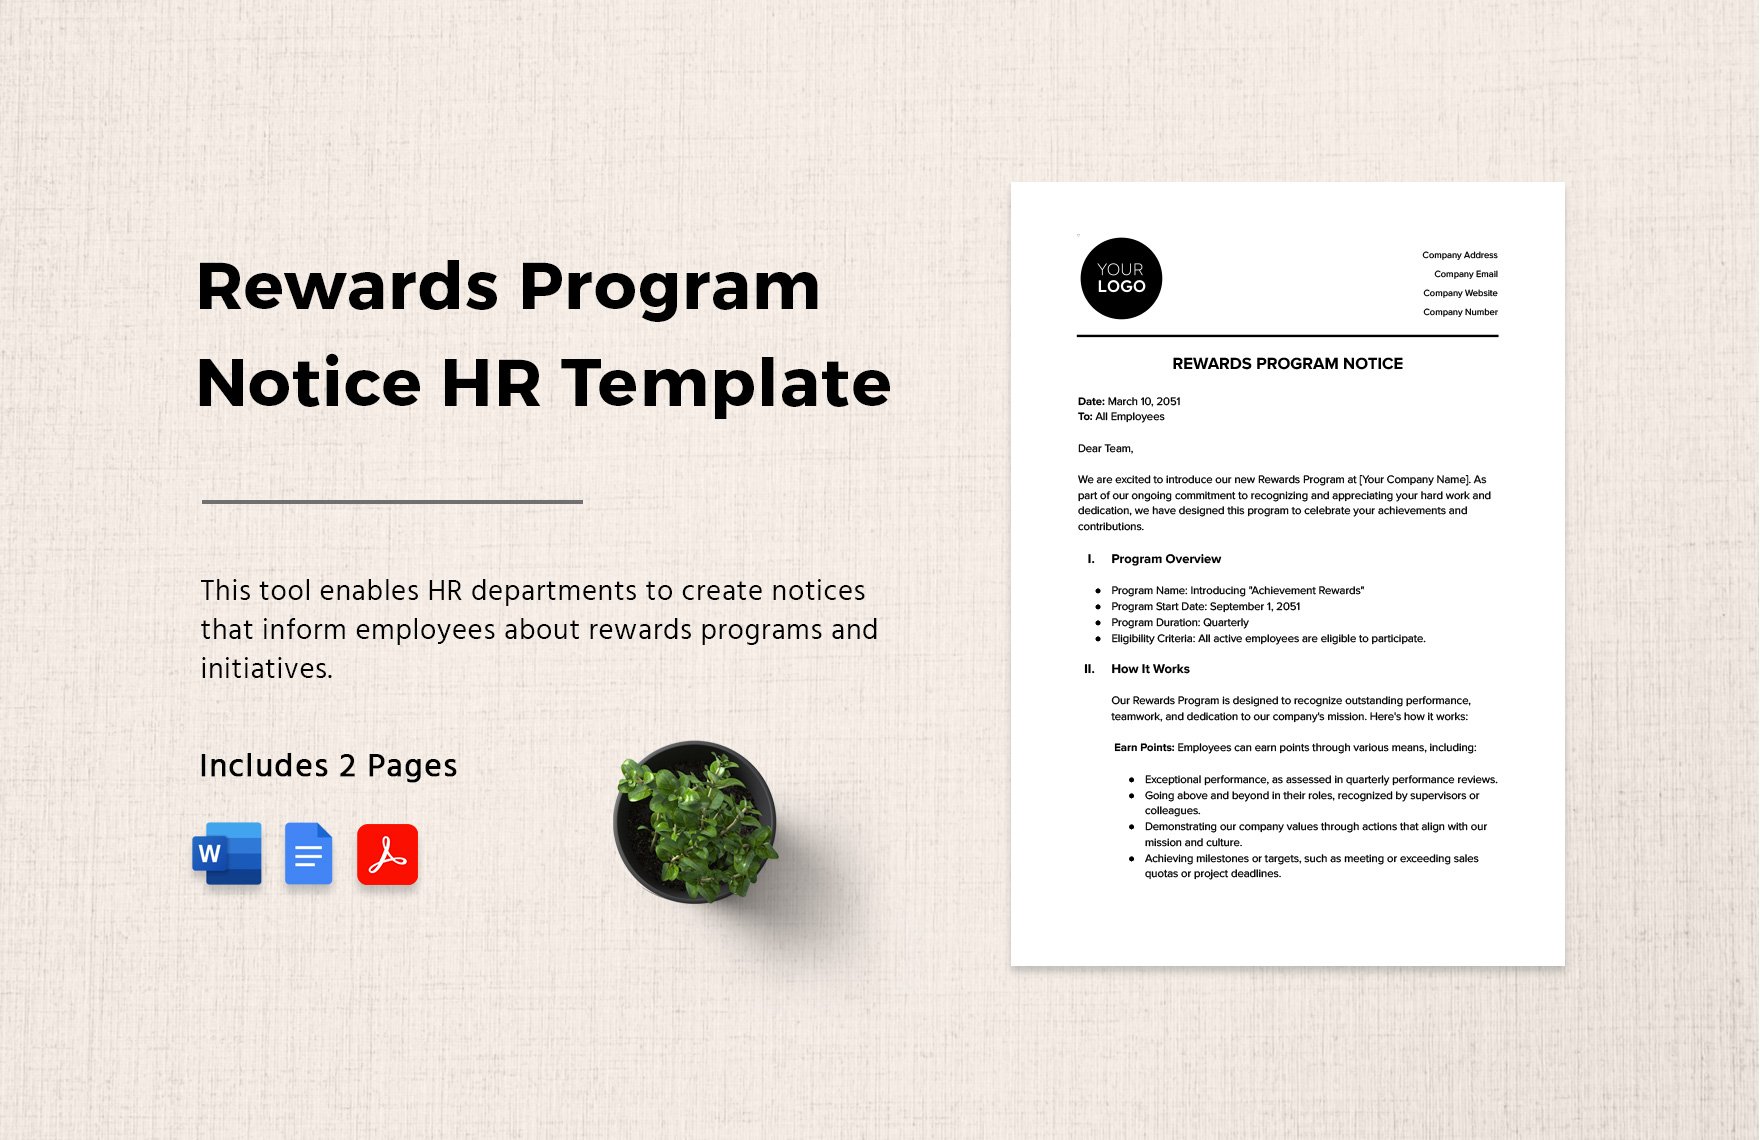 Rewards Program Notice HR Template